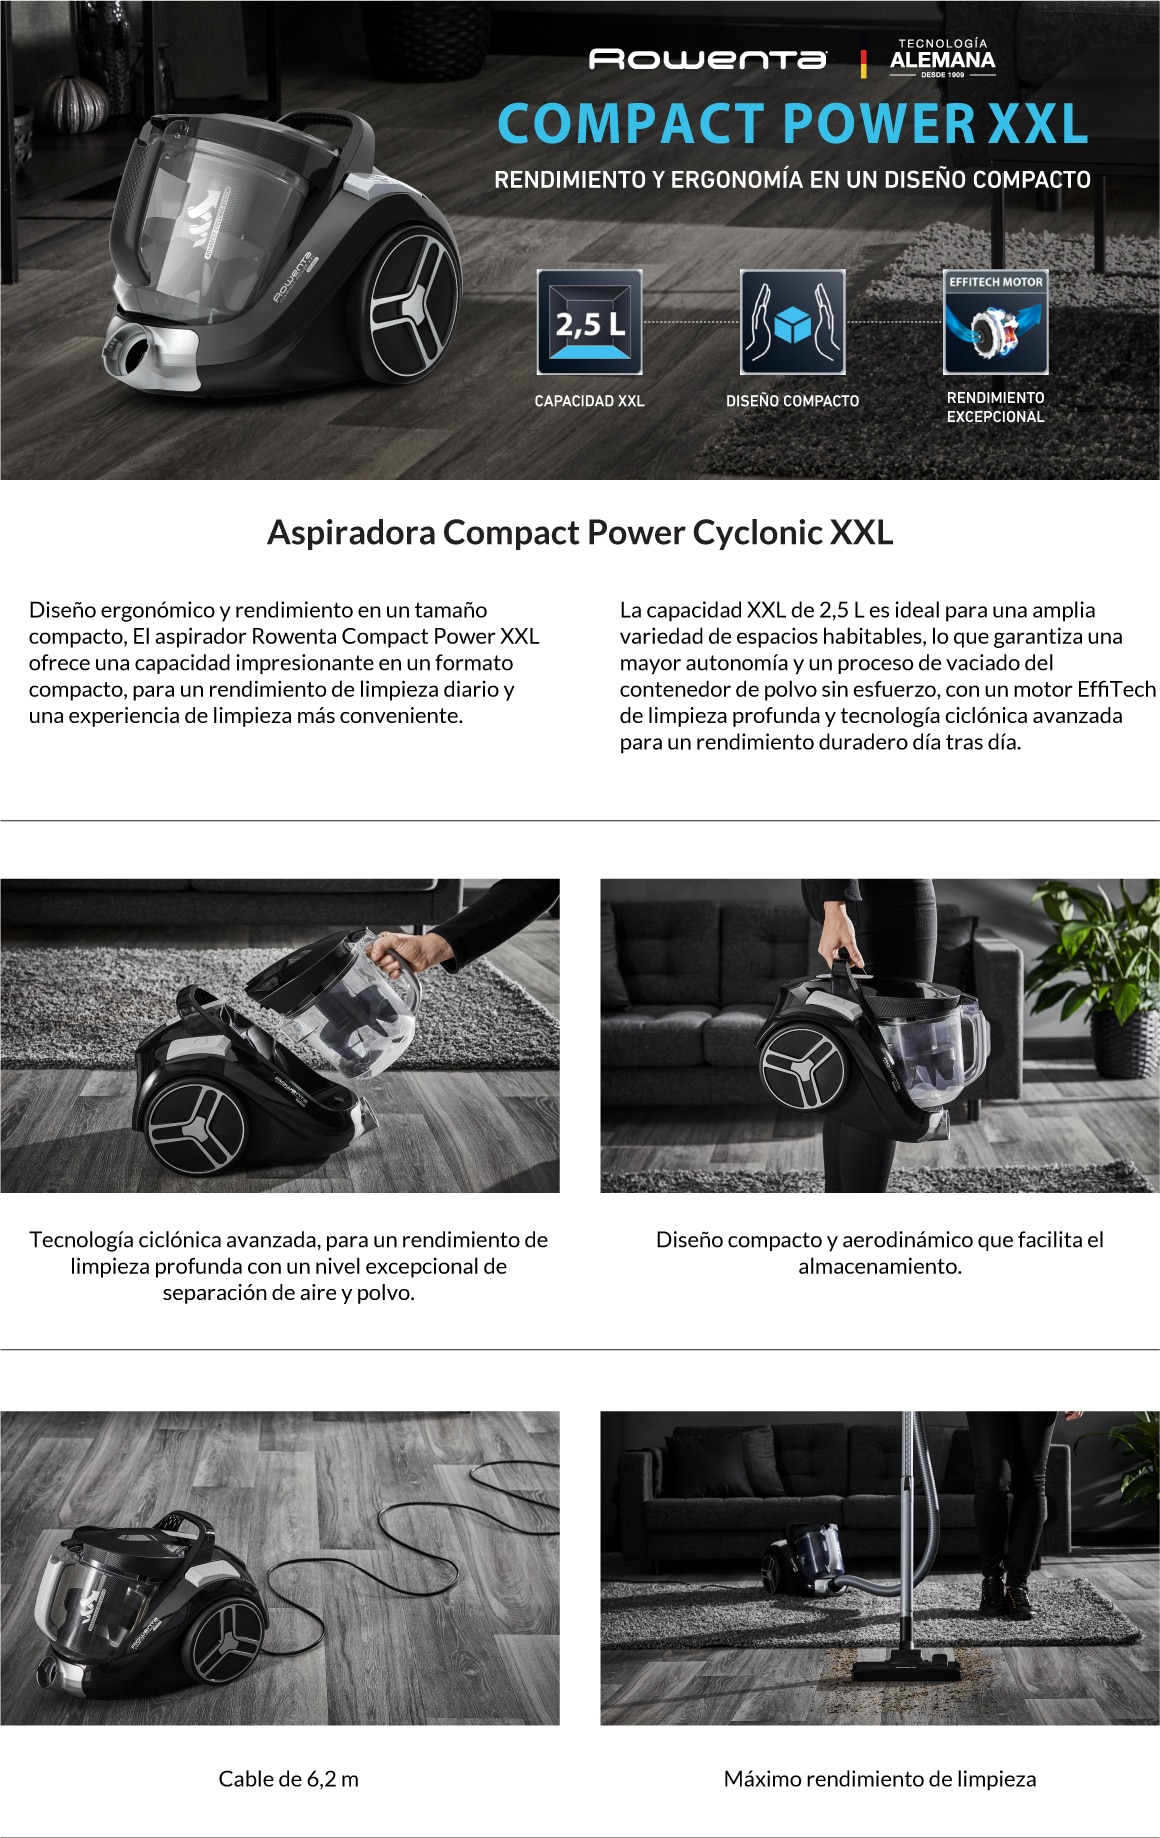 Aspiradora Rowenta Compact Power Cyclo XXL